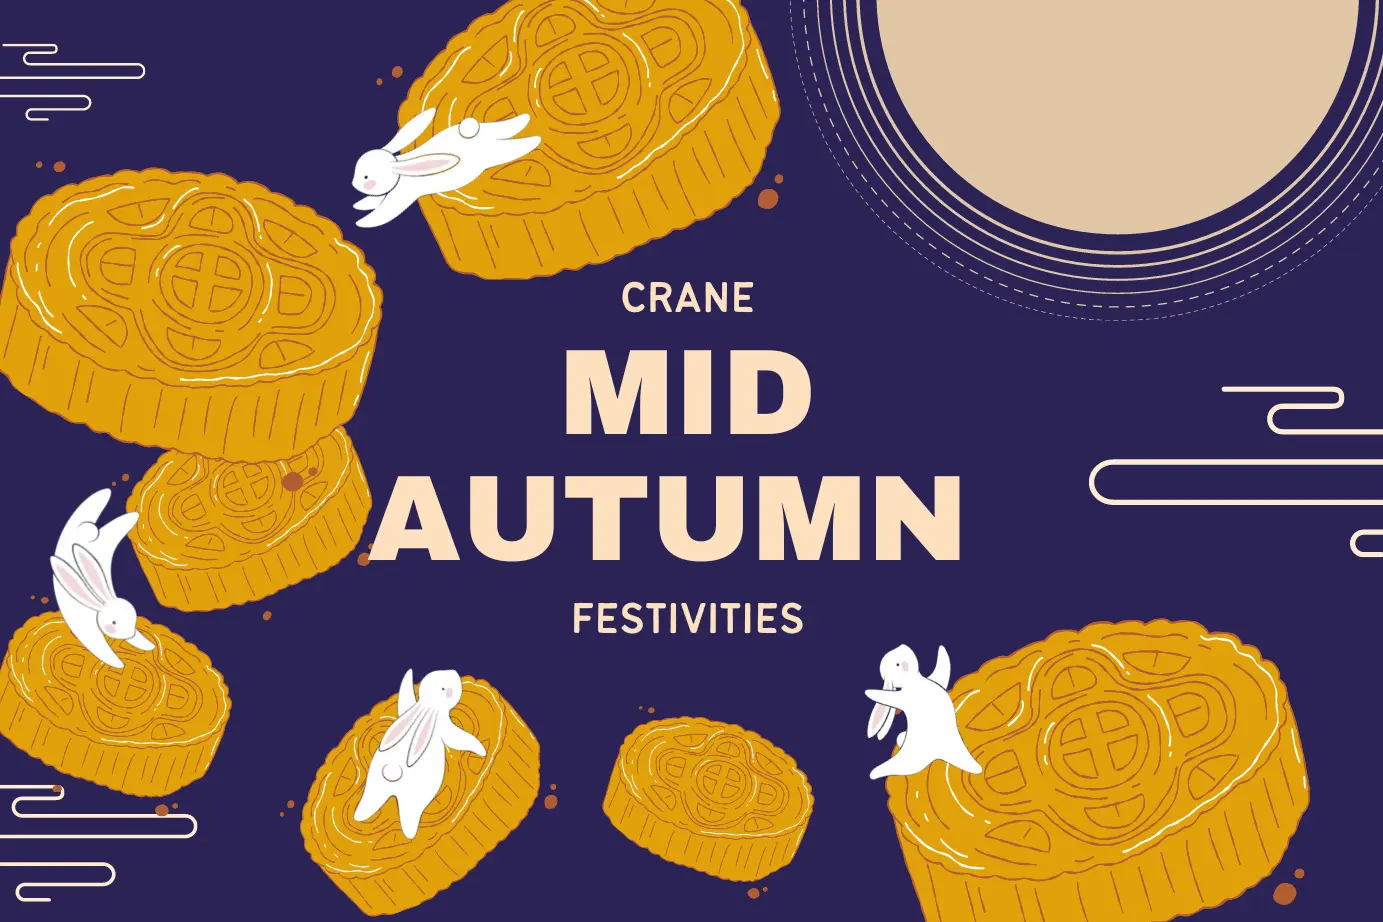 celebrate mid-autumn festivities with crane